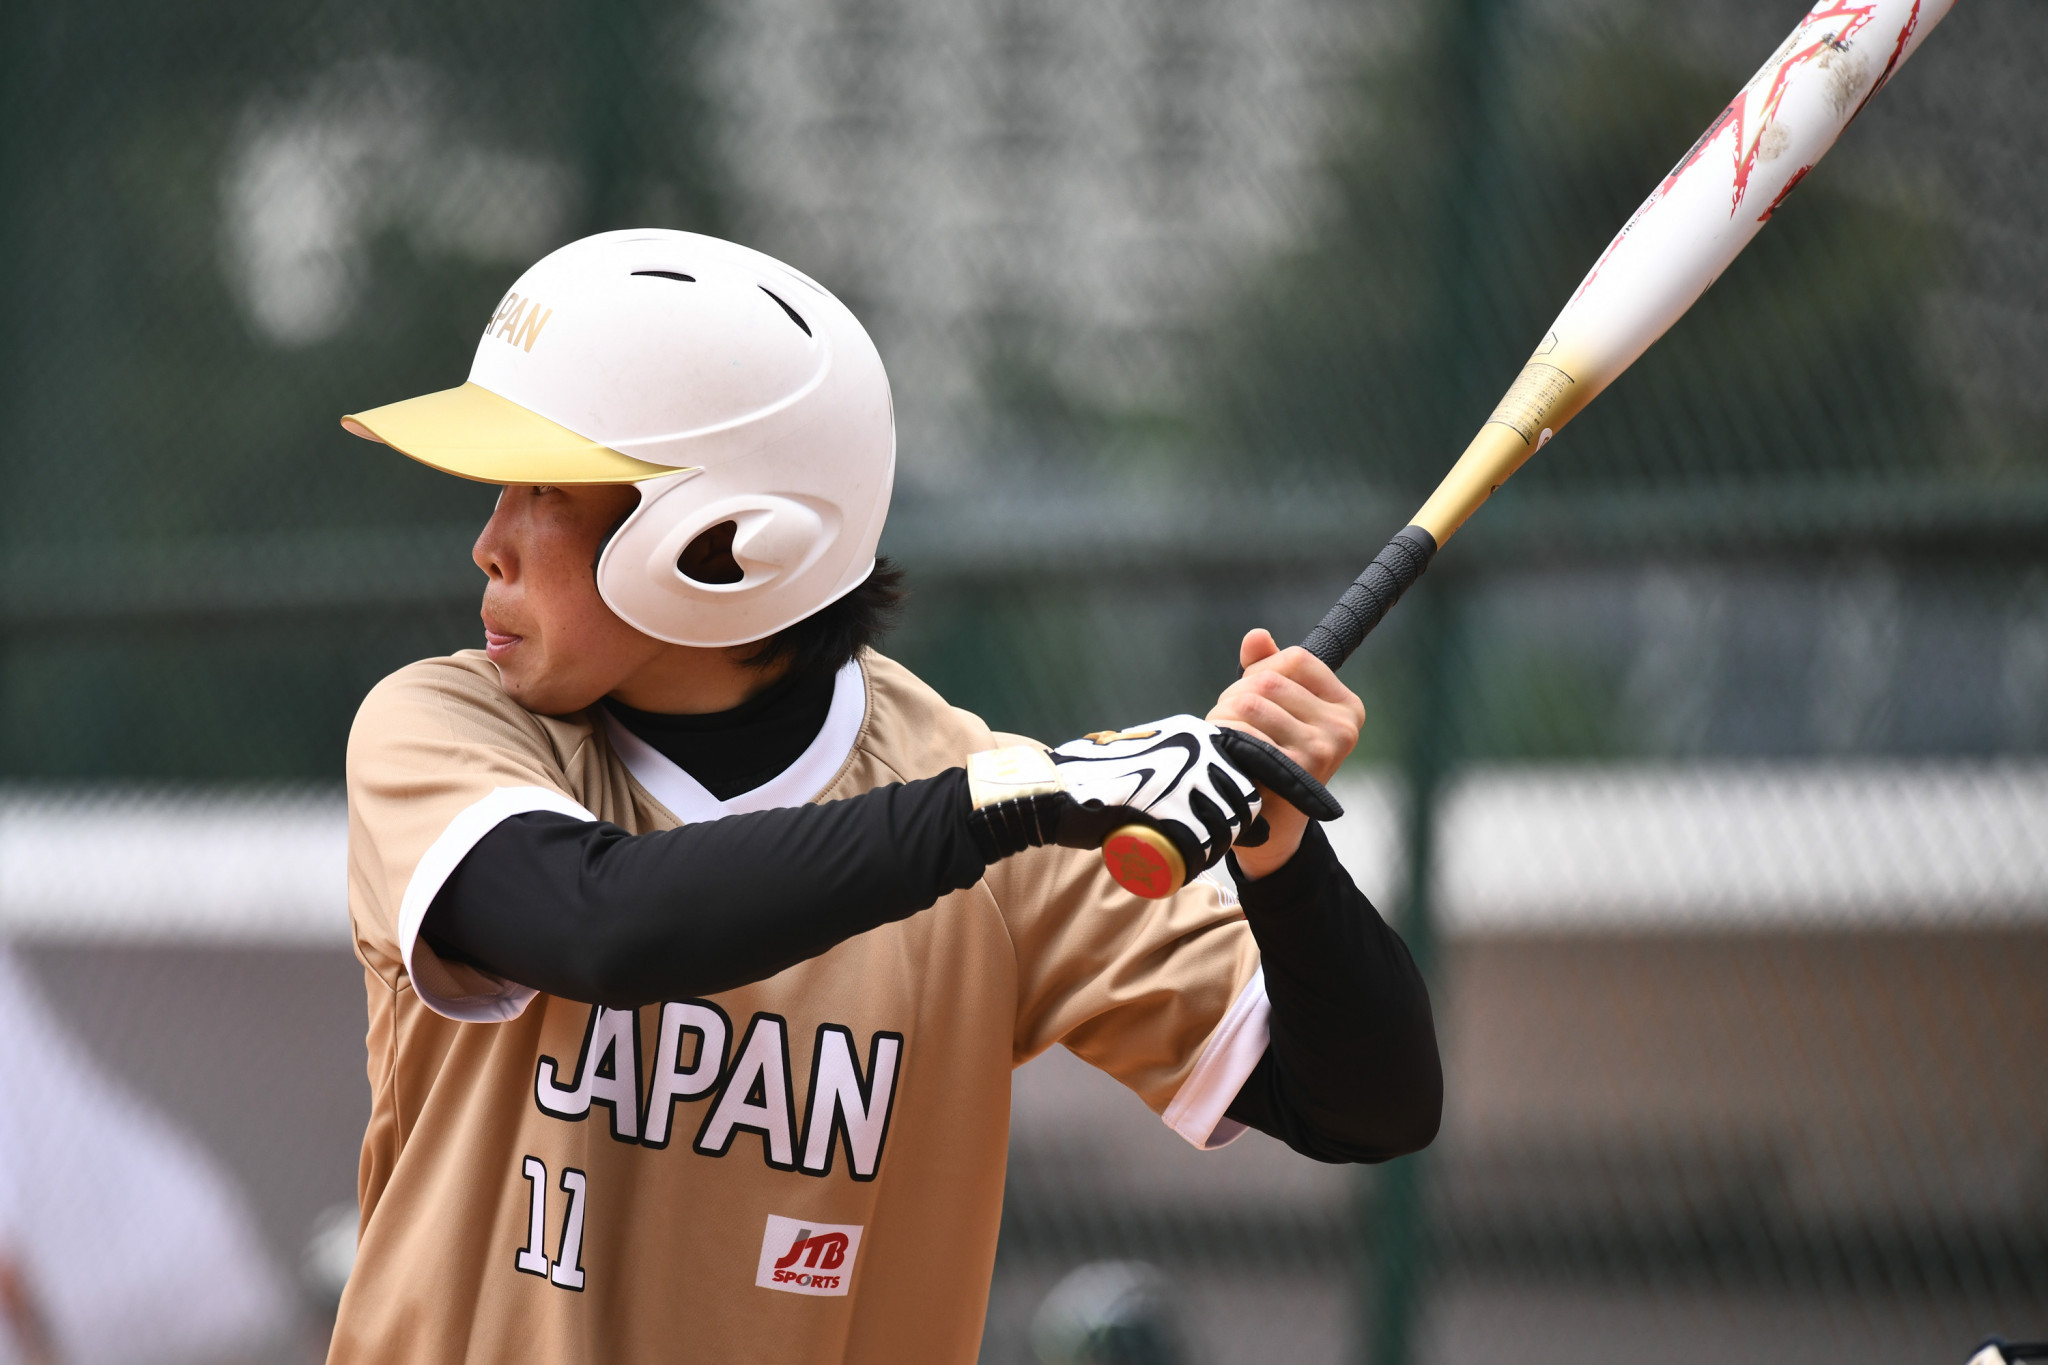 World Games athlete of the month award honours Japanese softball star Yamada